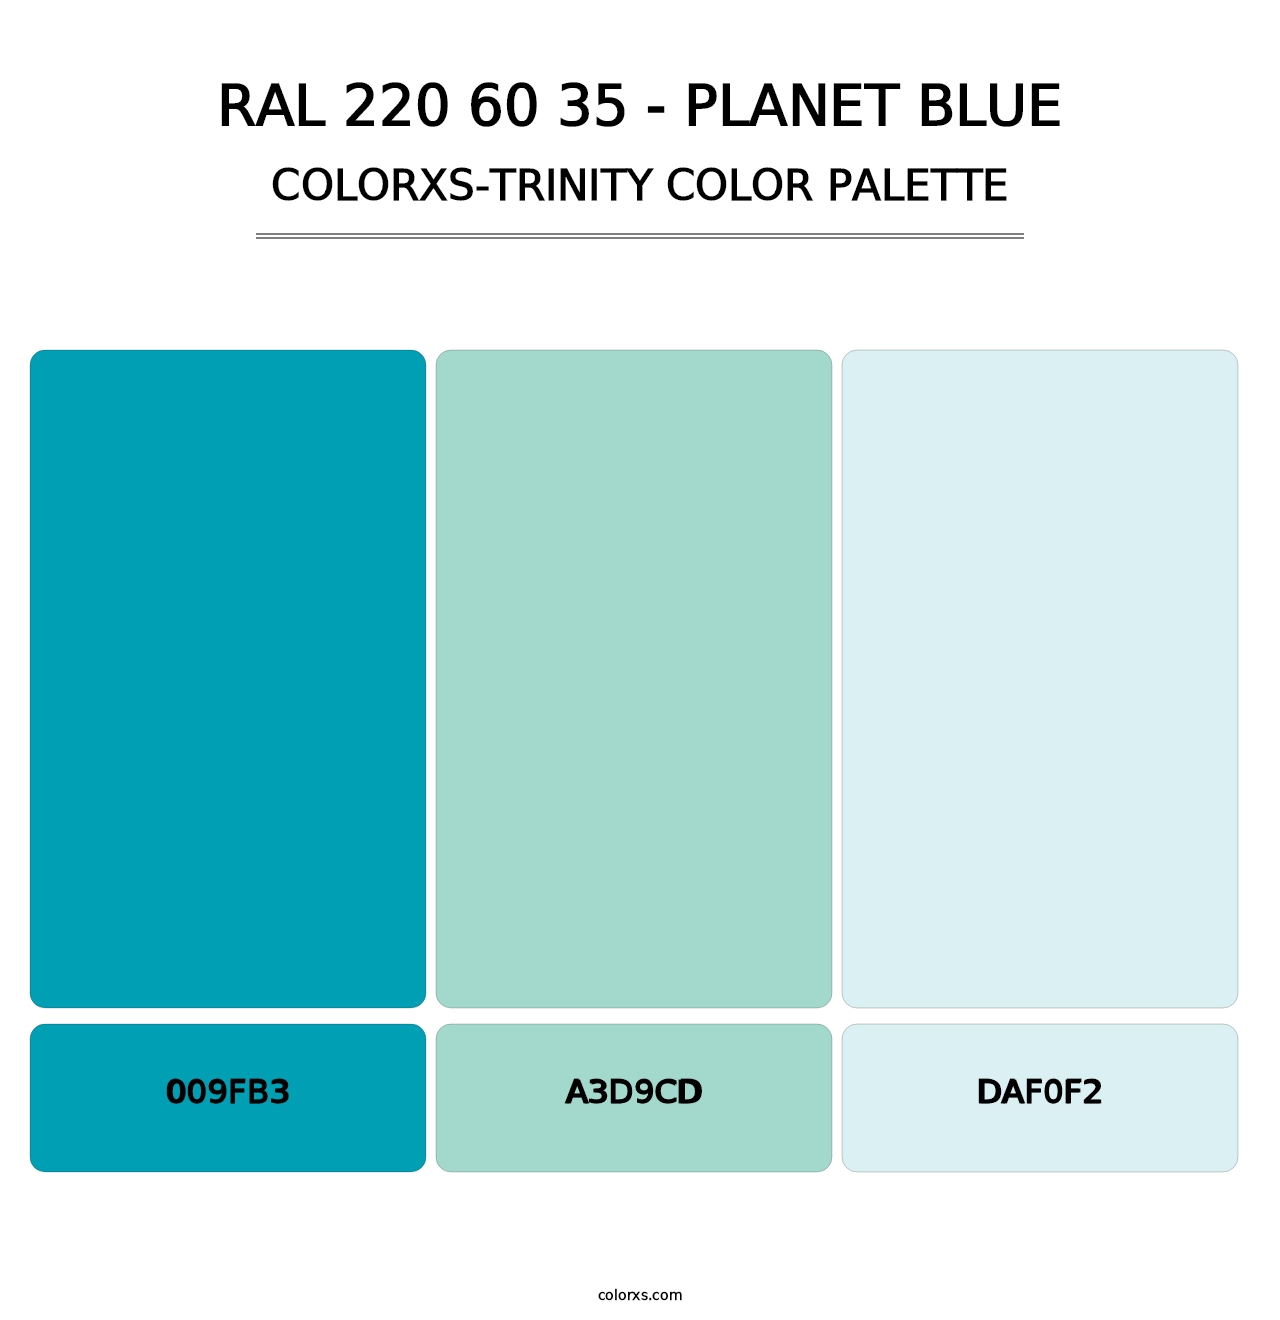 RAL 220 60 35 - Planet Blue - Colorxs Trinity Palette